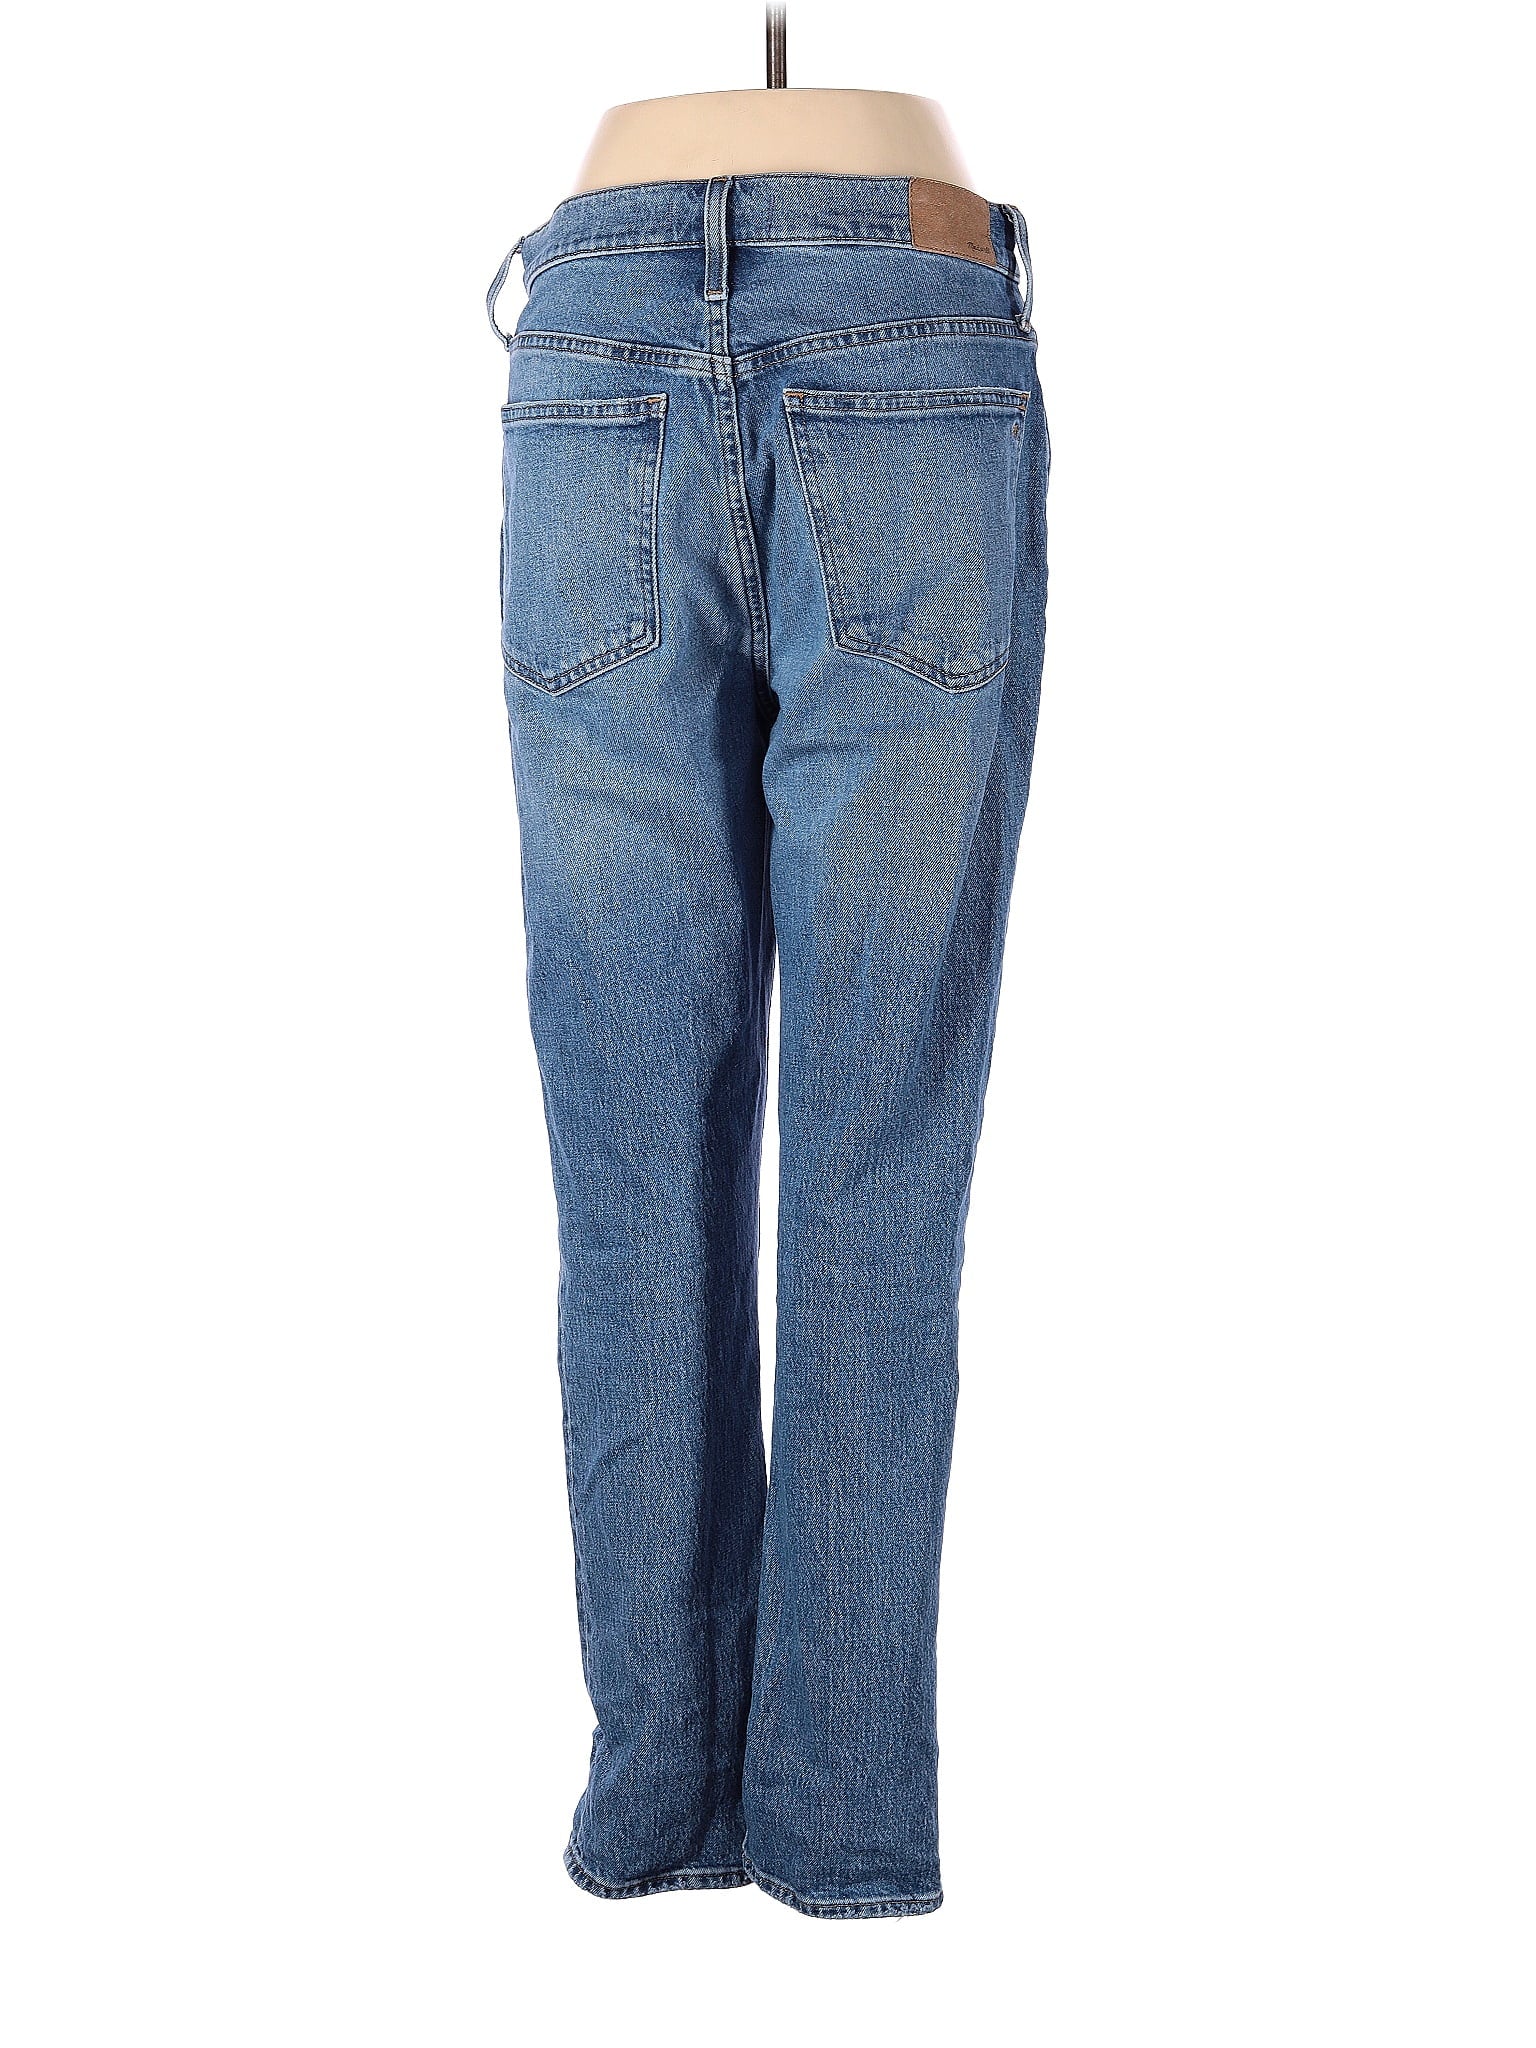 High-Rise Boyjeans Jeans in Medium Wash waist size - 28